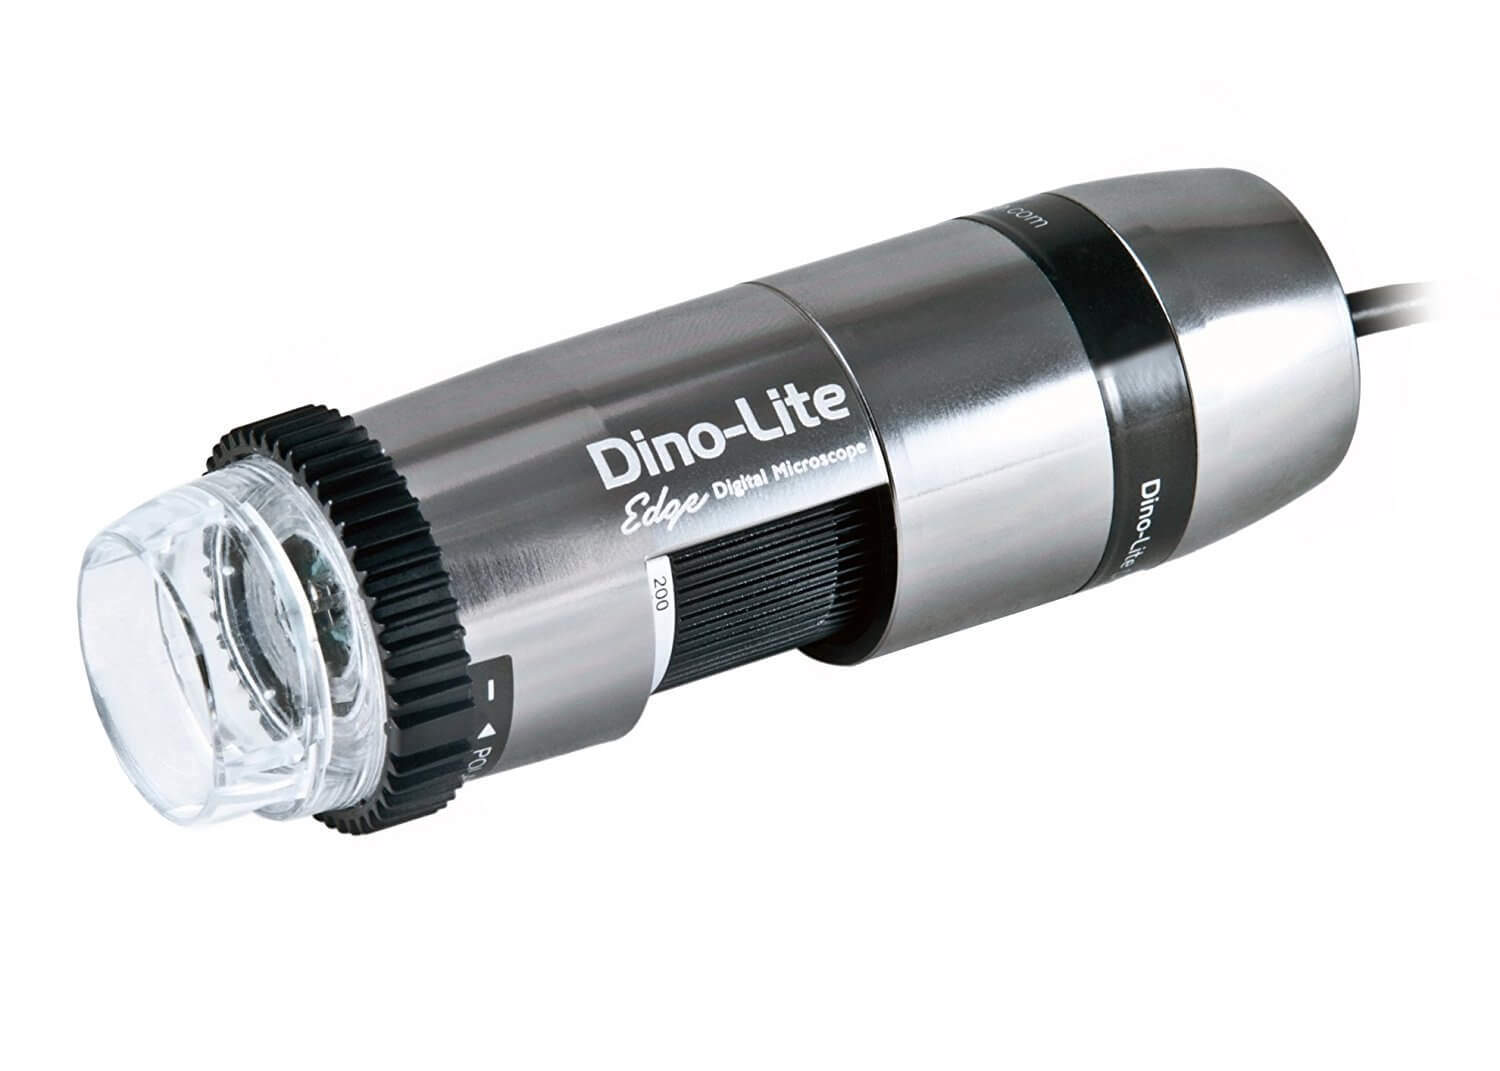 Dino-Lite USB Hanheld Digital Microscope